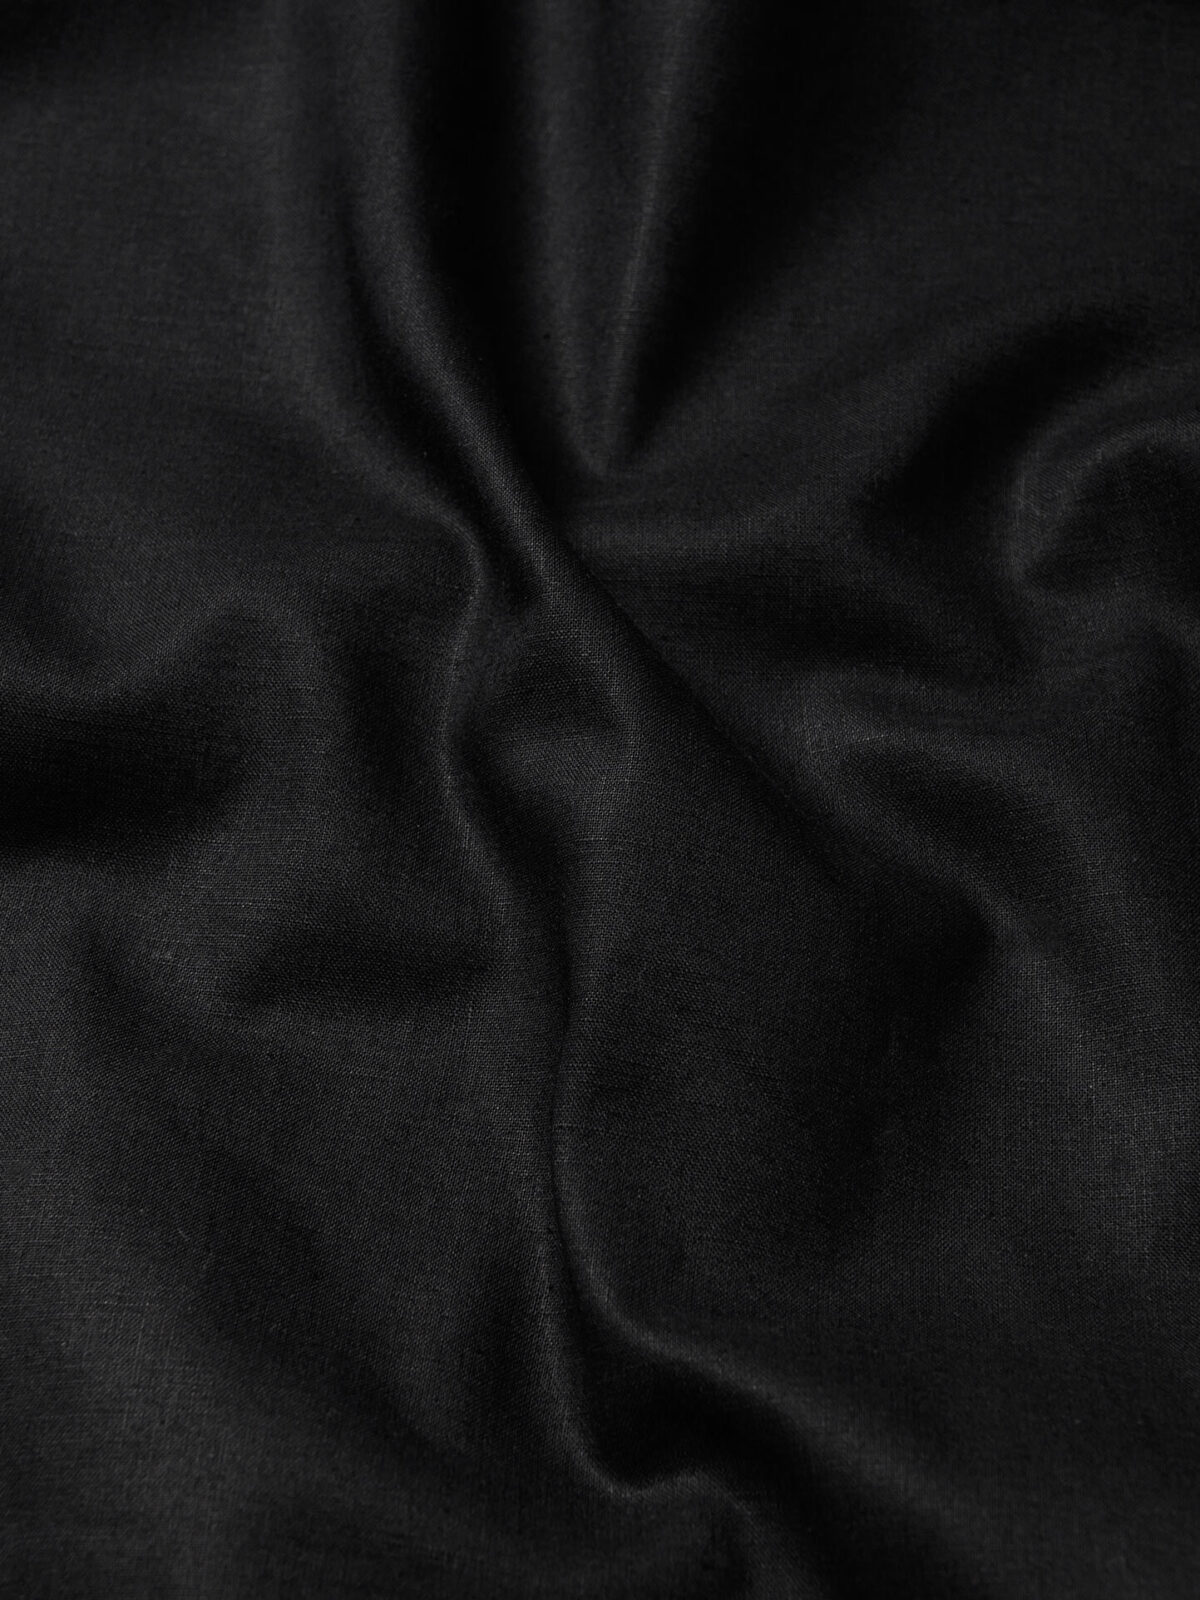 Black Cotton and Linen Blend Shirts by Proper Cloth